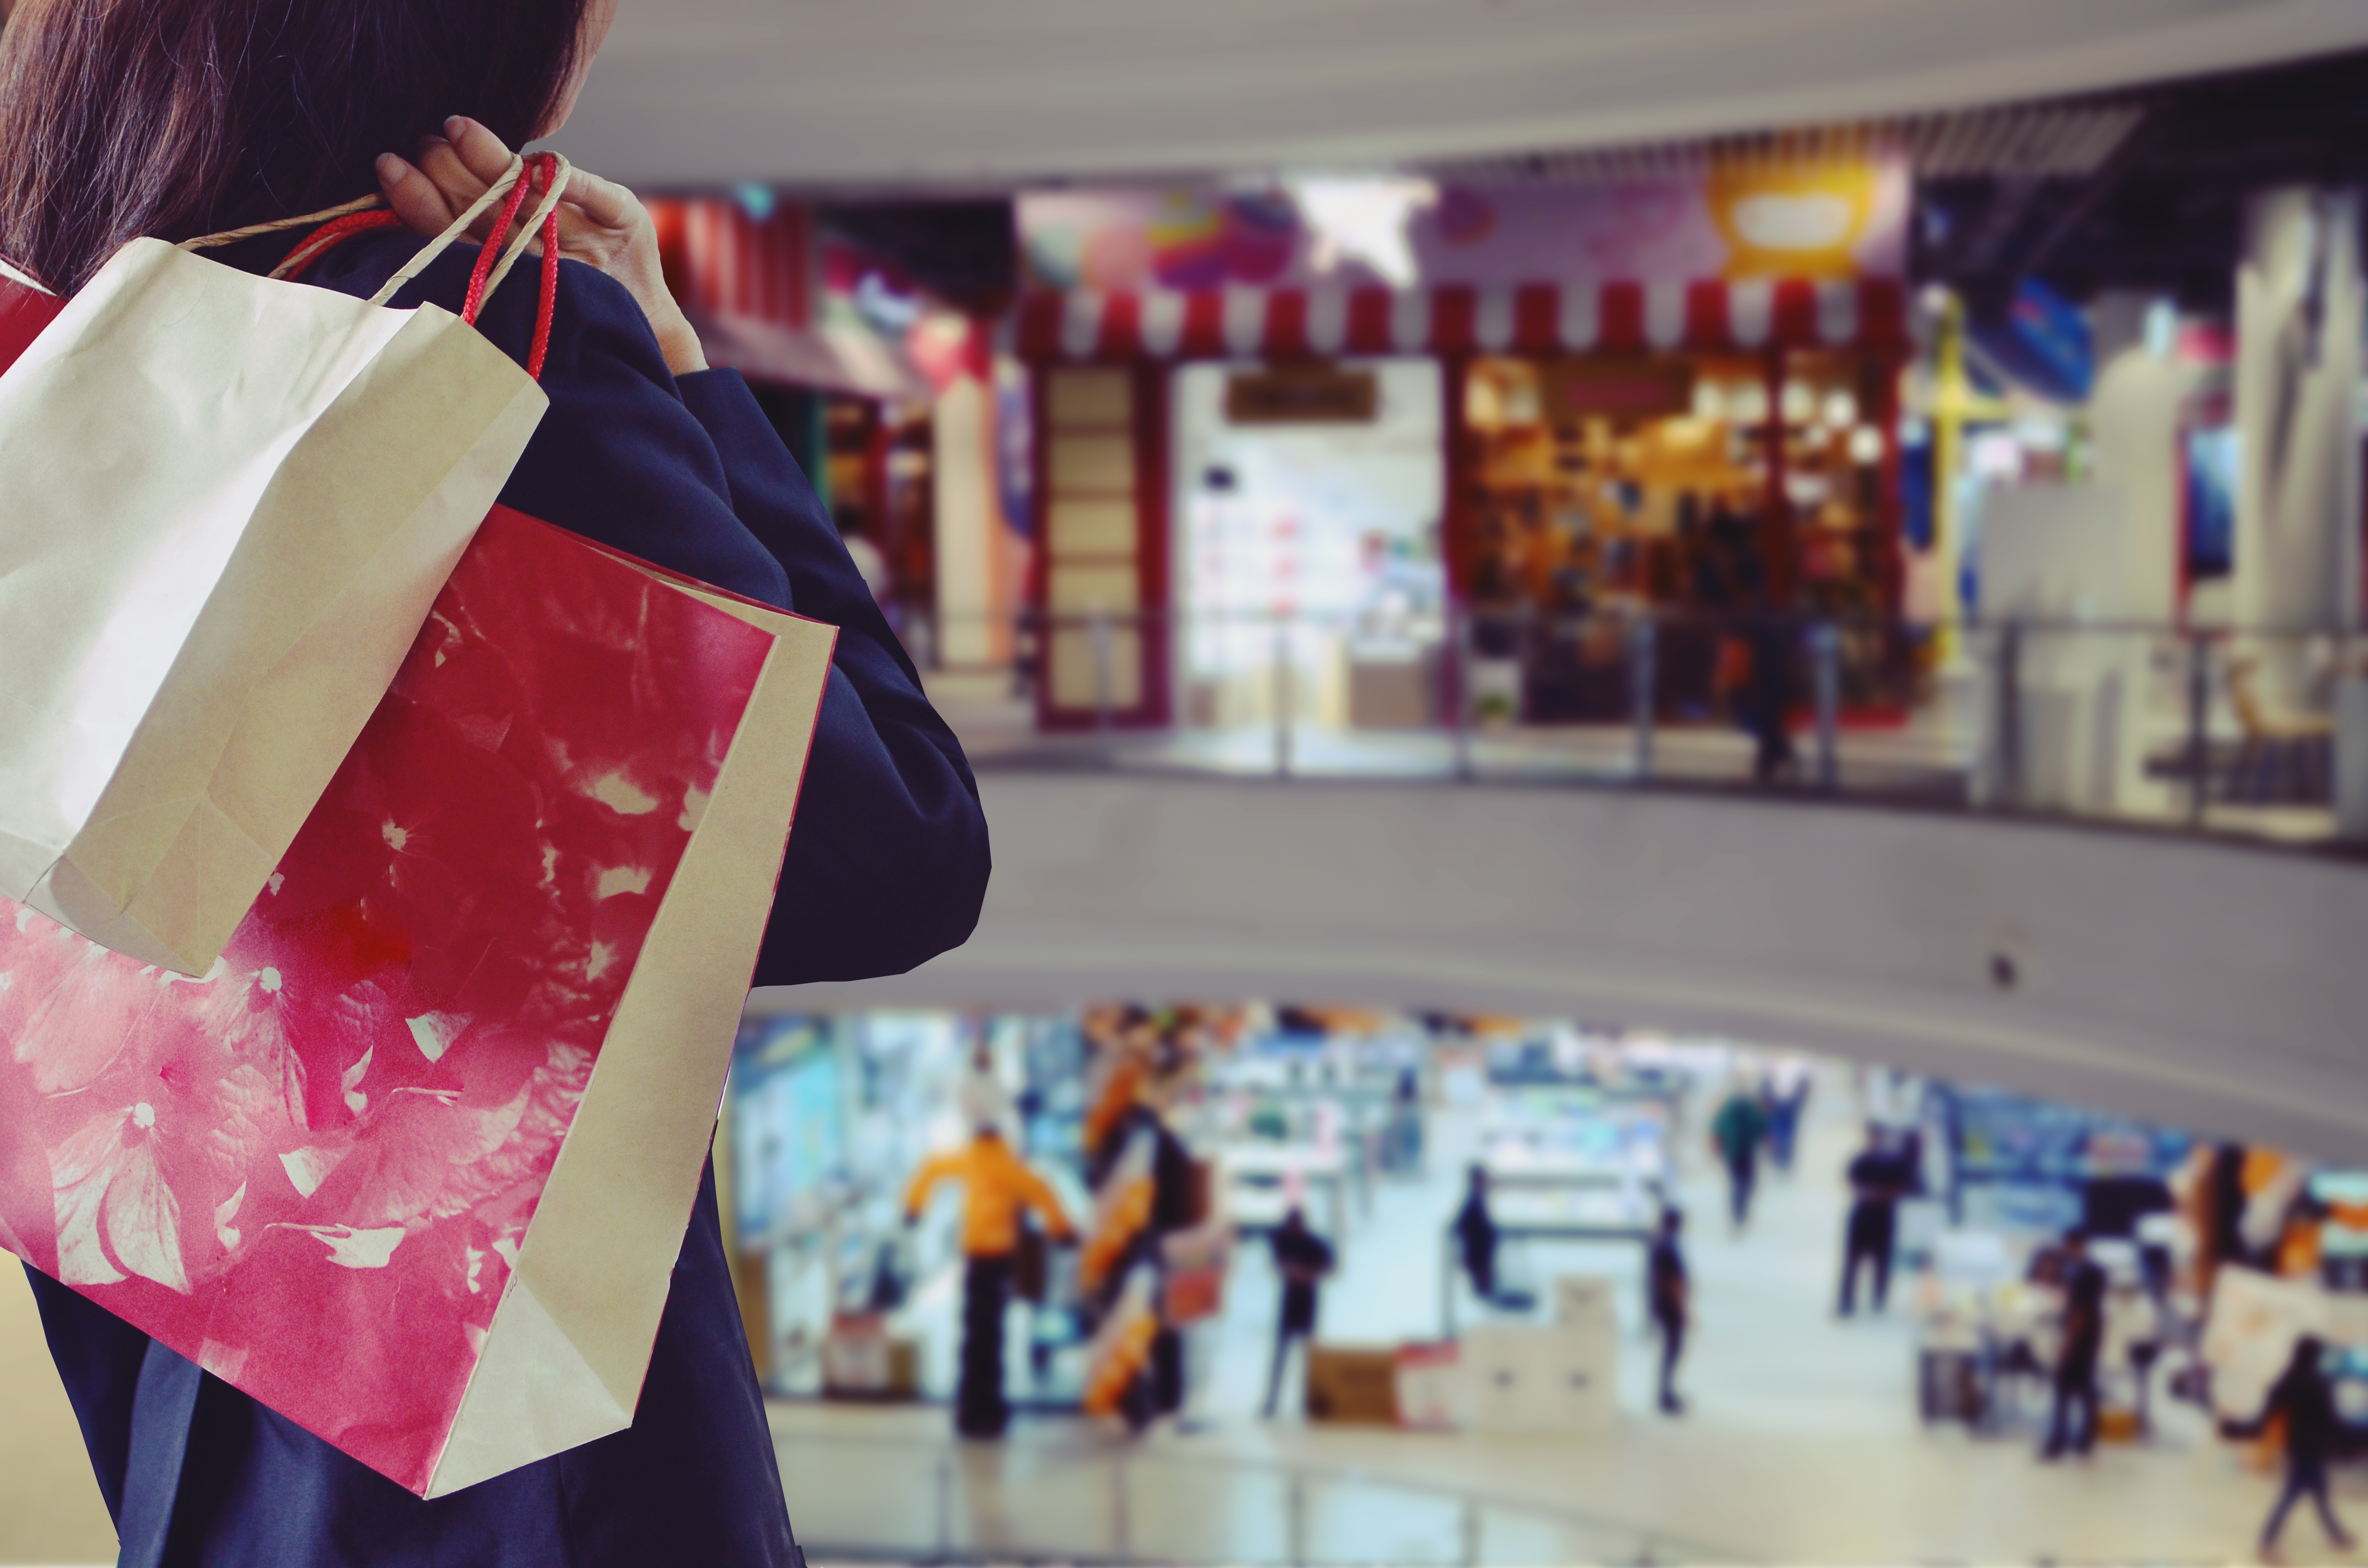 A woman holding shopping bags | Source: Shutterstock